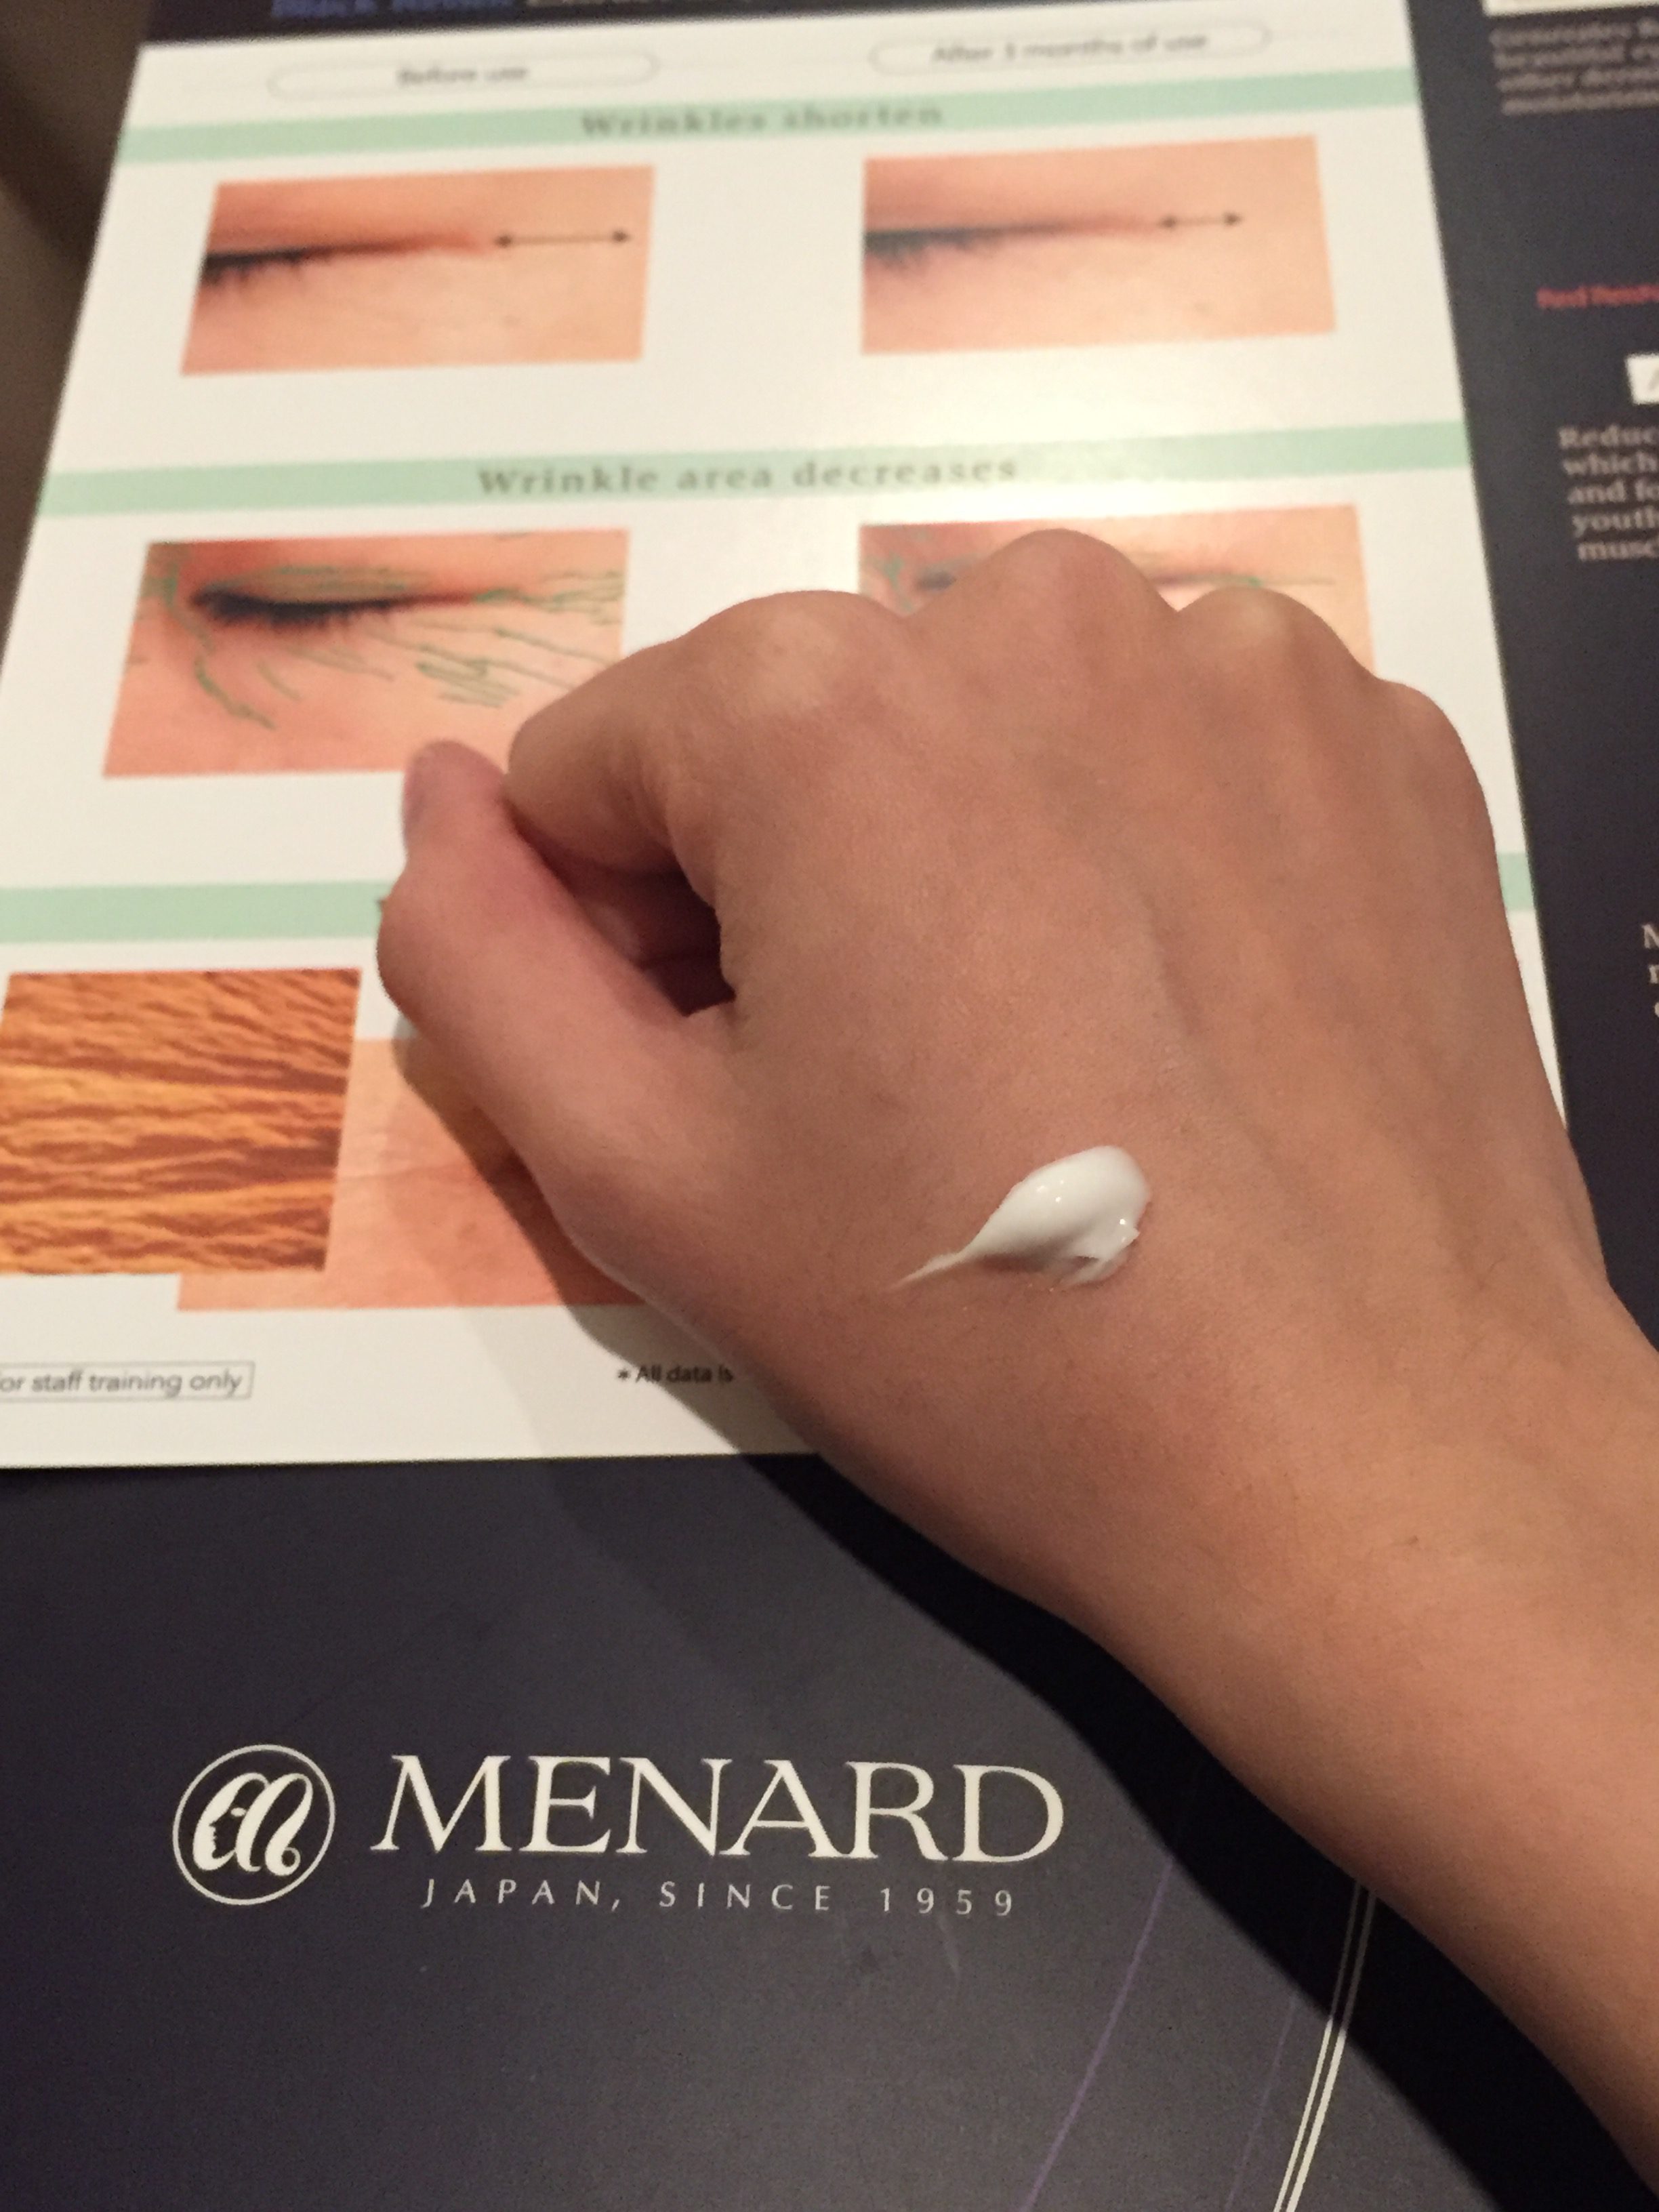 Menard Embellie Eye Cream Launch-Pamper.my